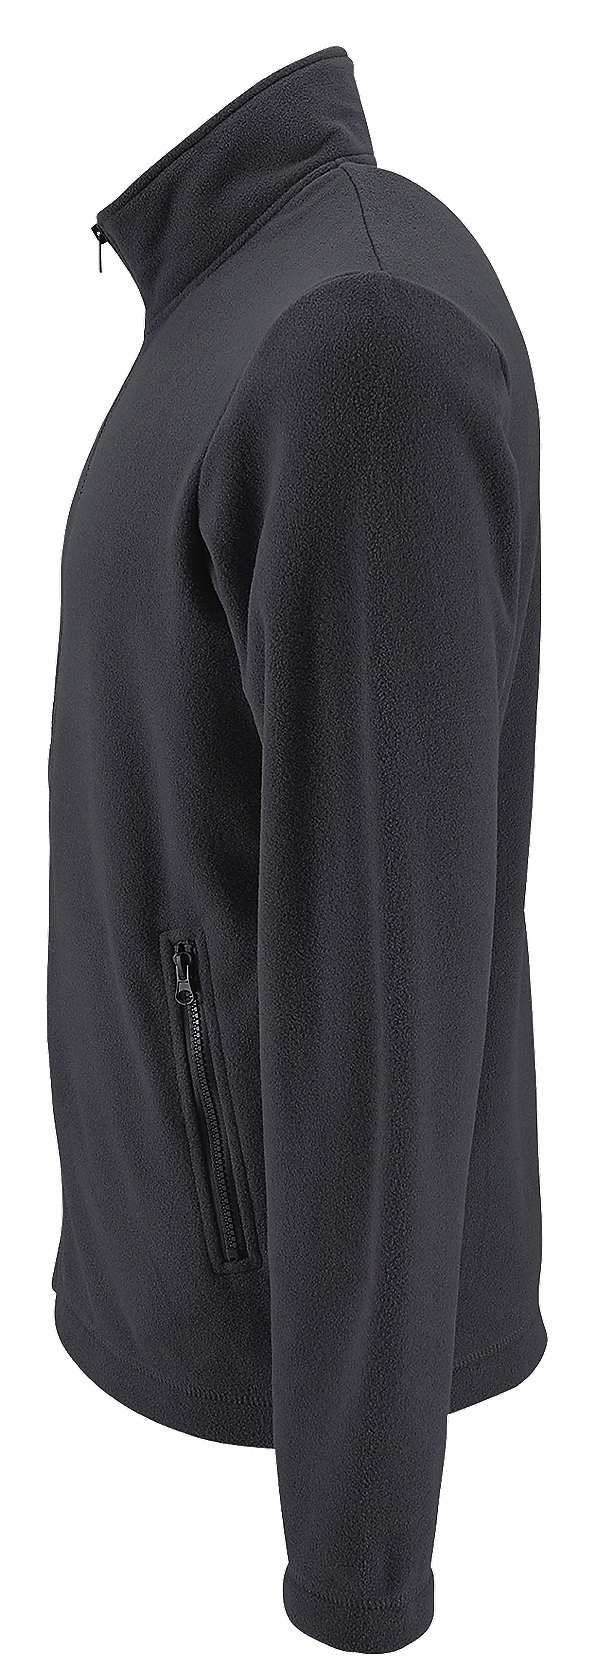 Men´s Plain Fleece Jacket Norman L02093